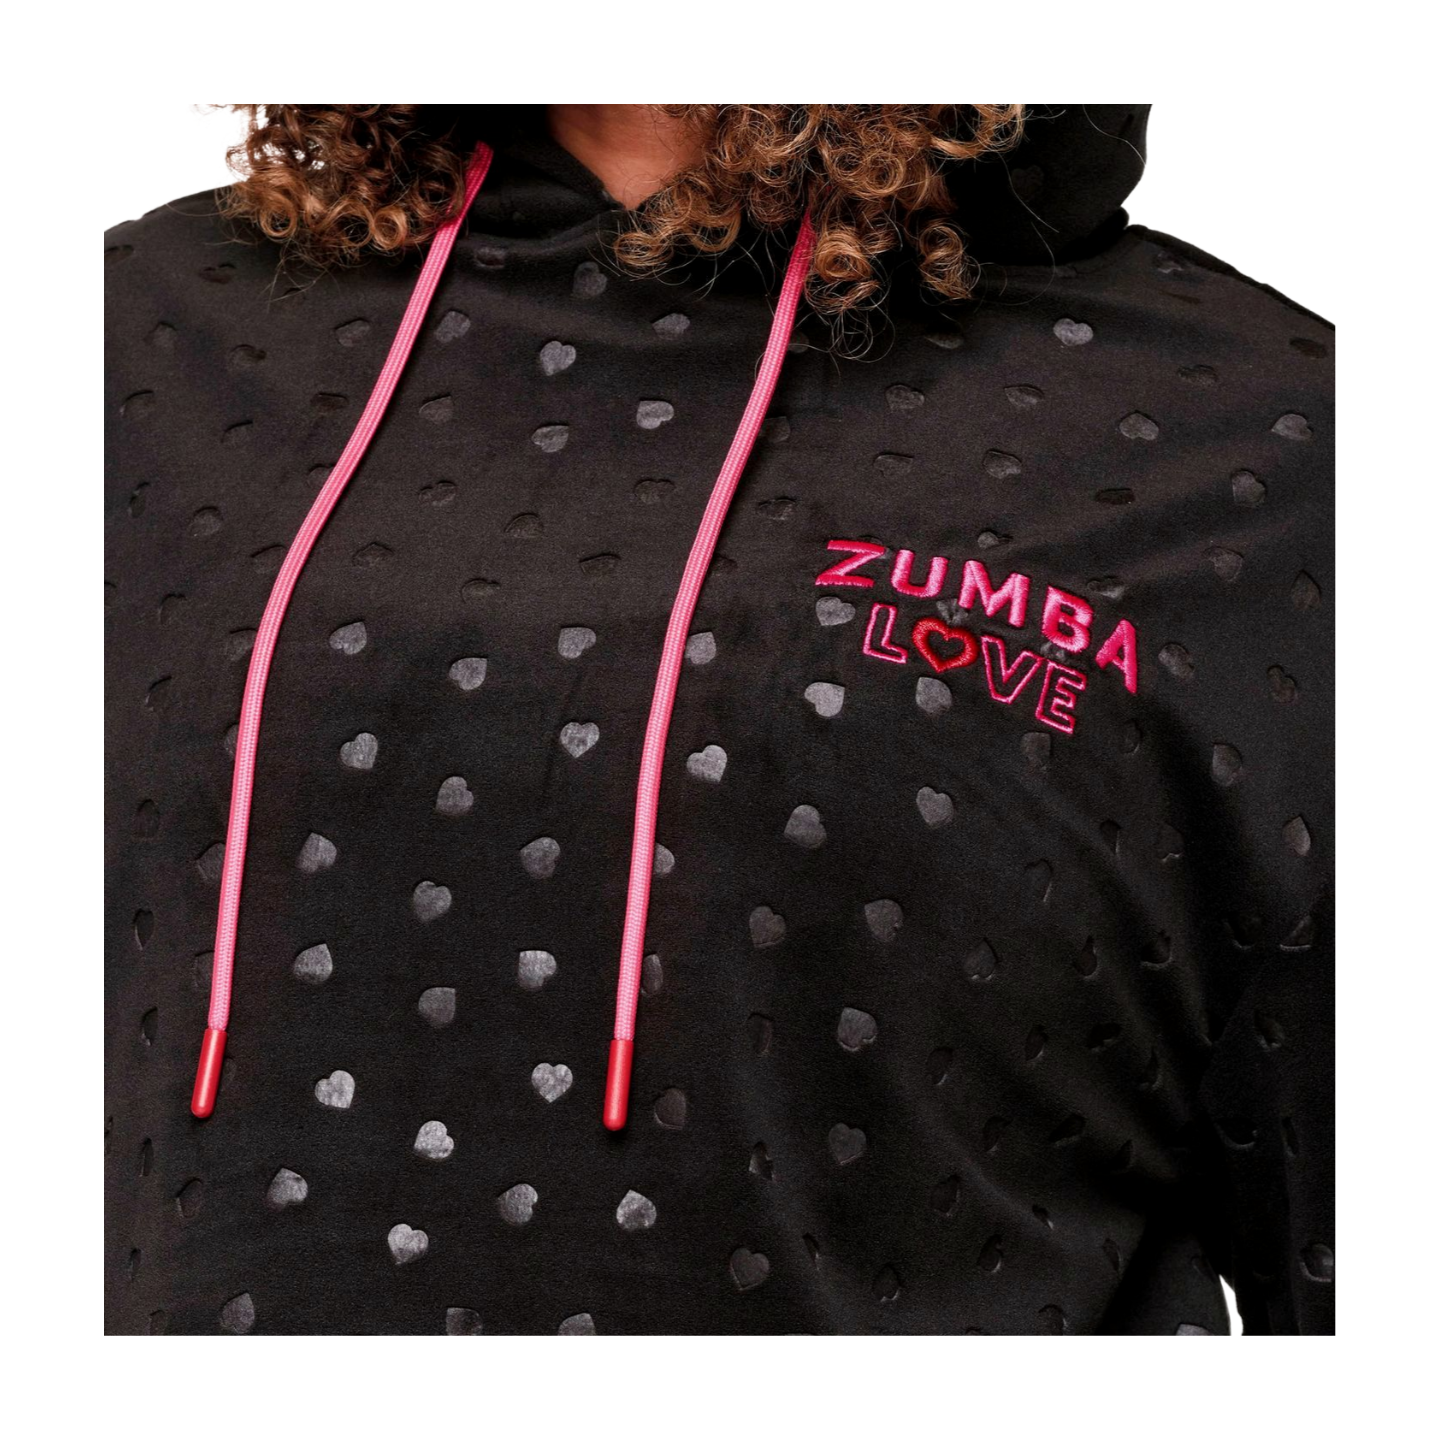 Zumba Kiss Crop Sweatshirt (Pre-Order)